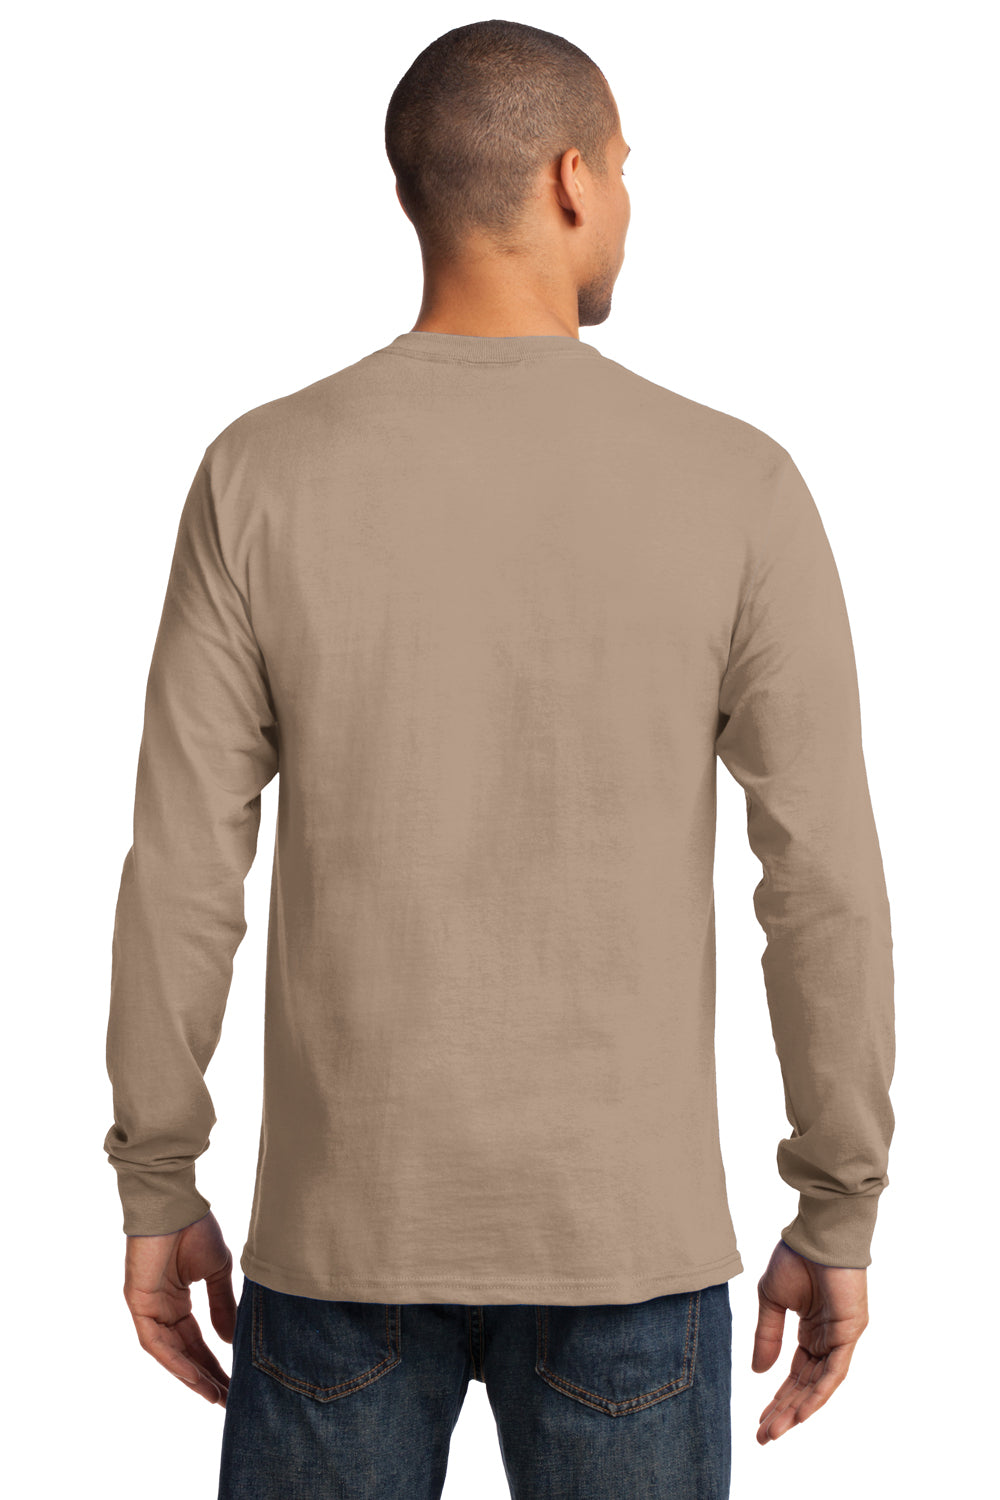 Port & Company PC61LS Mens Essential Long Sleeve Crewneck T-Shirt Sand Brown Back